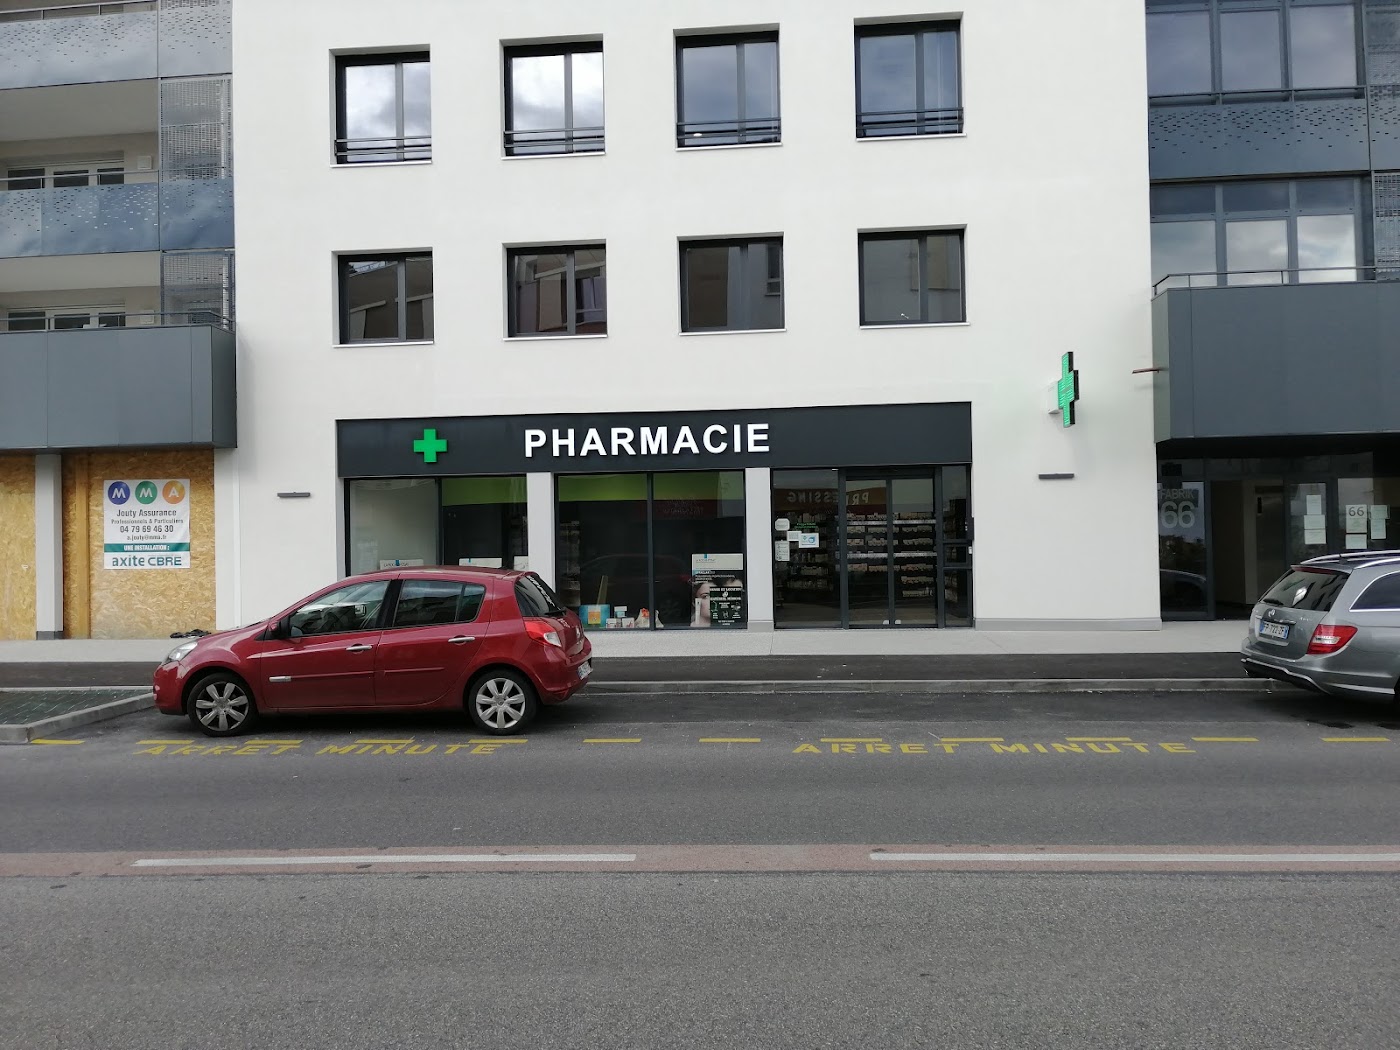 Pharmacie Roche